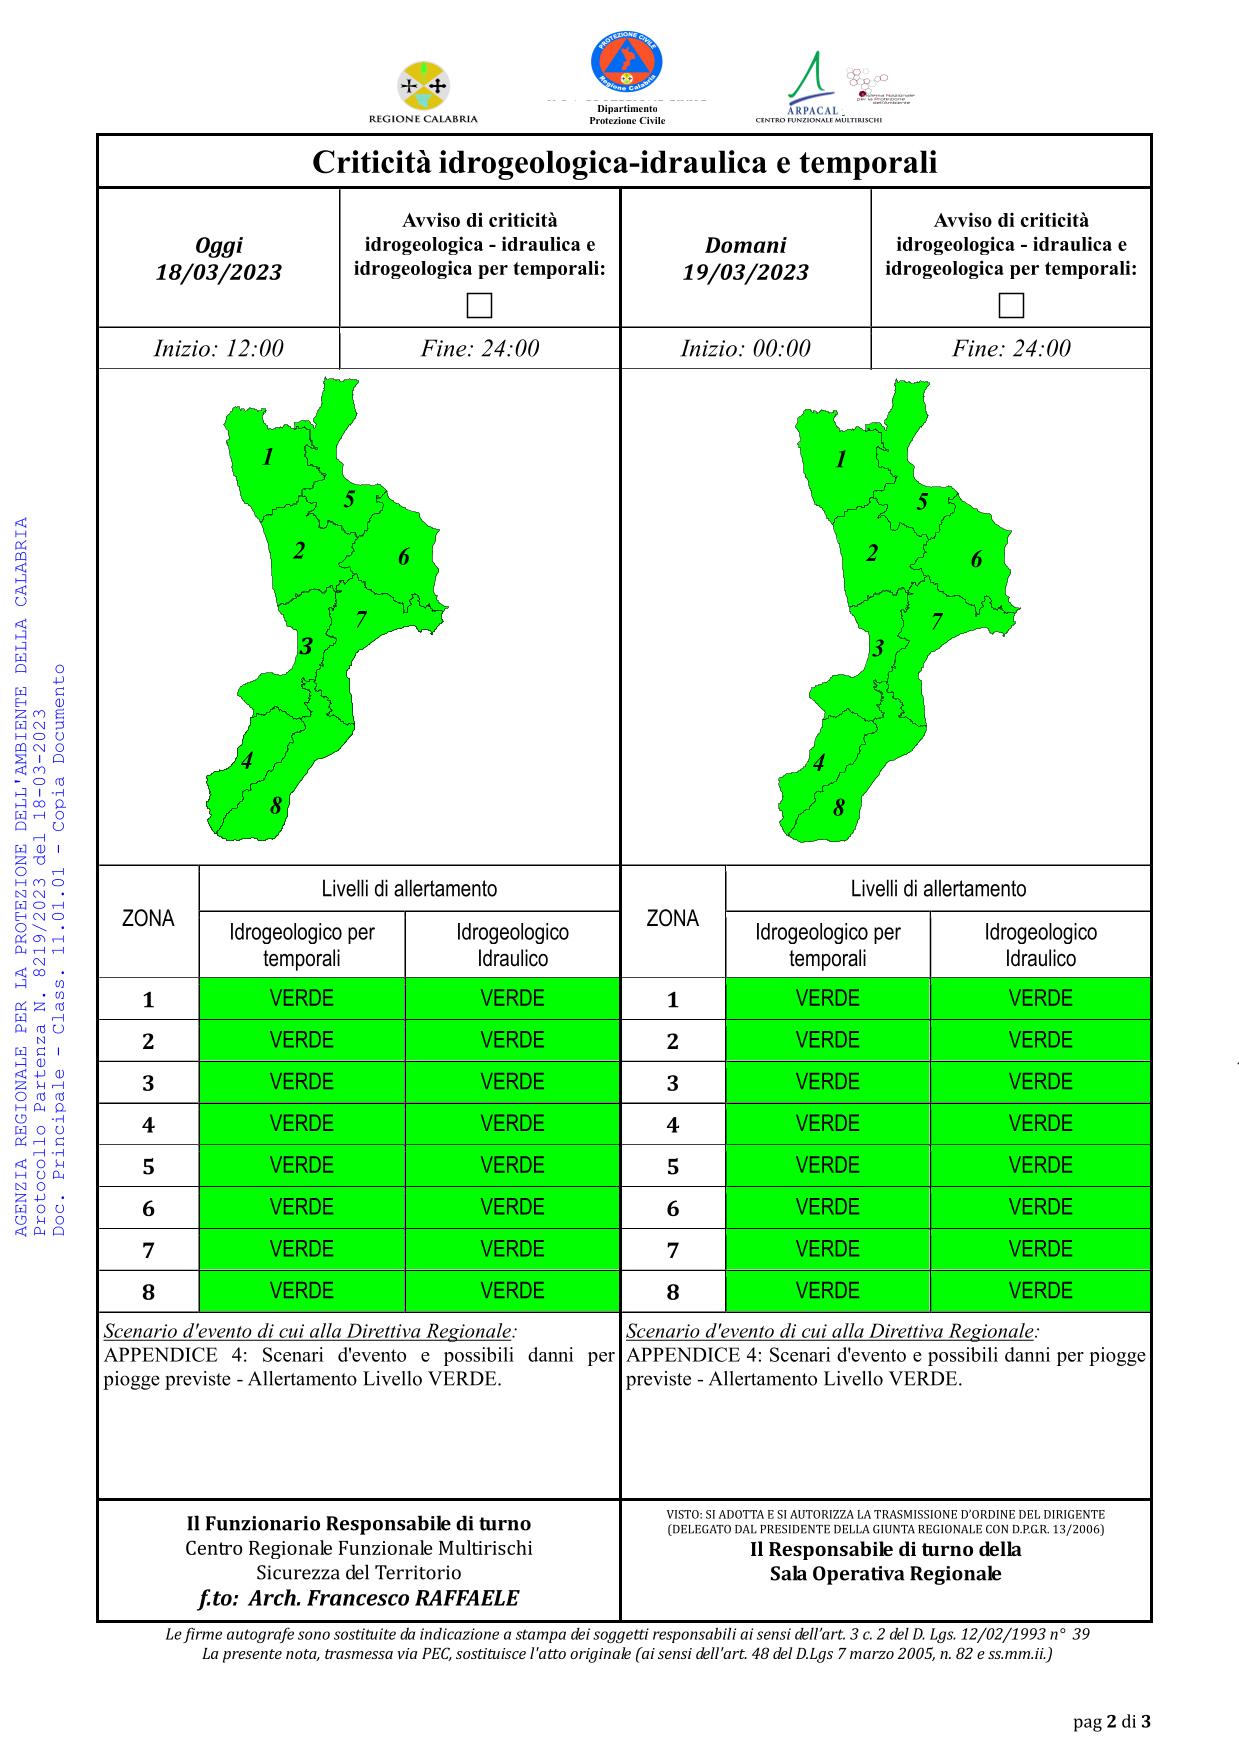 Criticità idrogeologica-idraulica e temporali in Calabria 18-03-2023